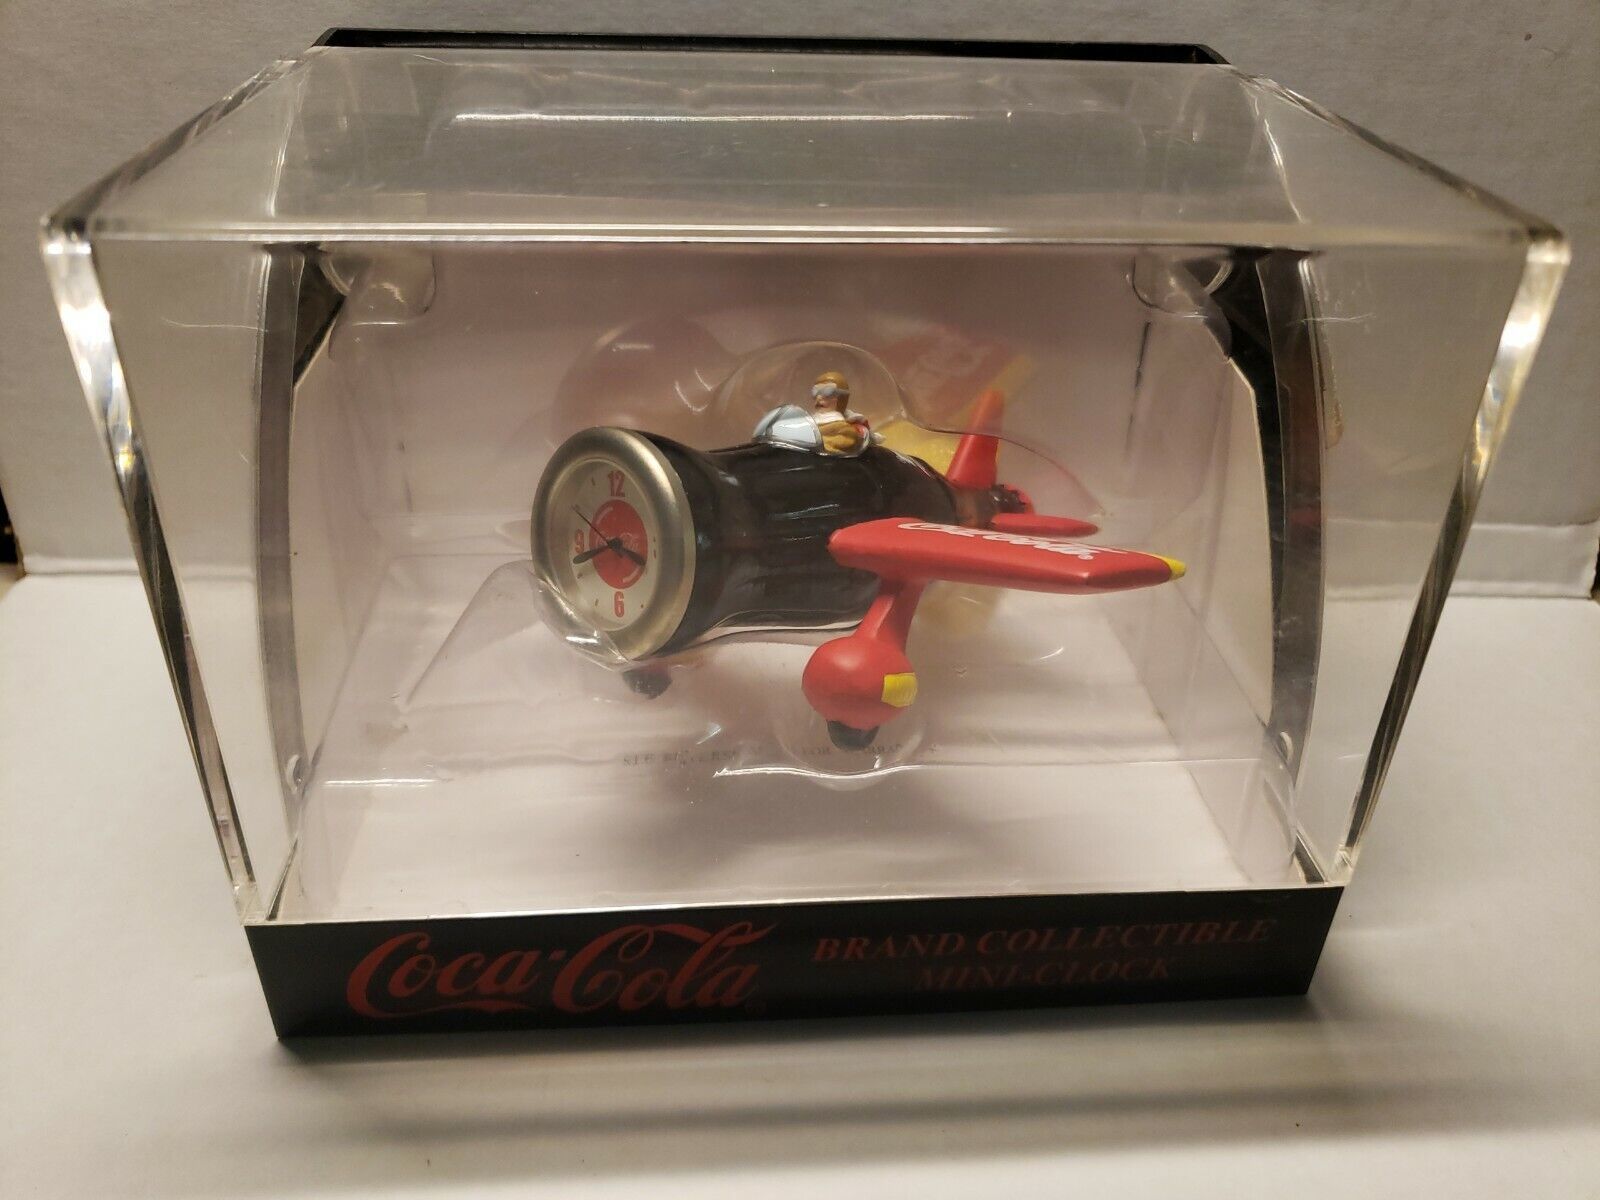 New 1999 Coca Cola Brand Collectable Mini Clock (Airplane) NIB U72 - $24.99